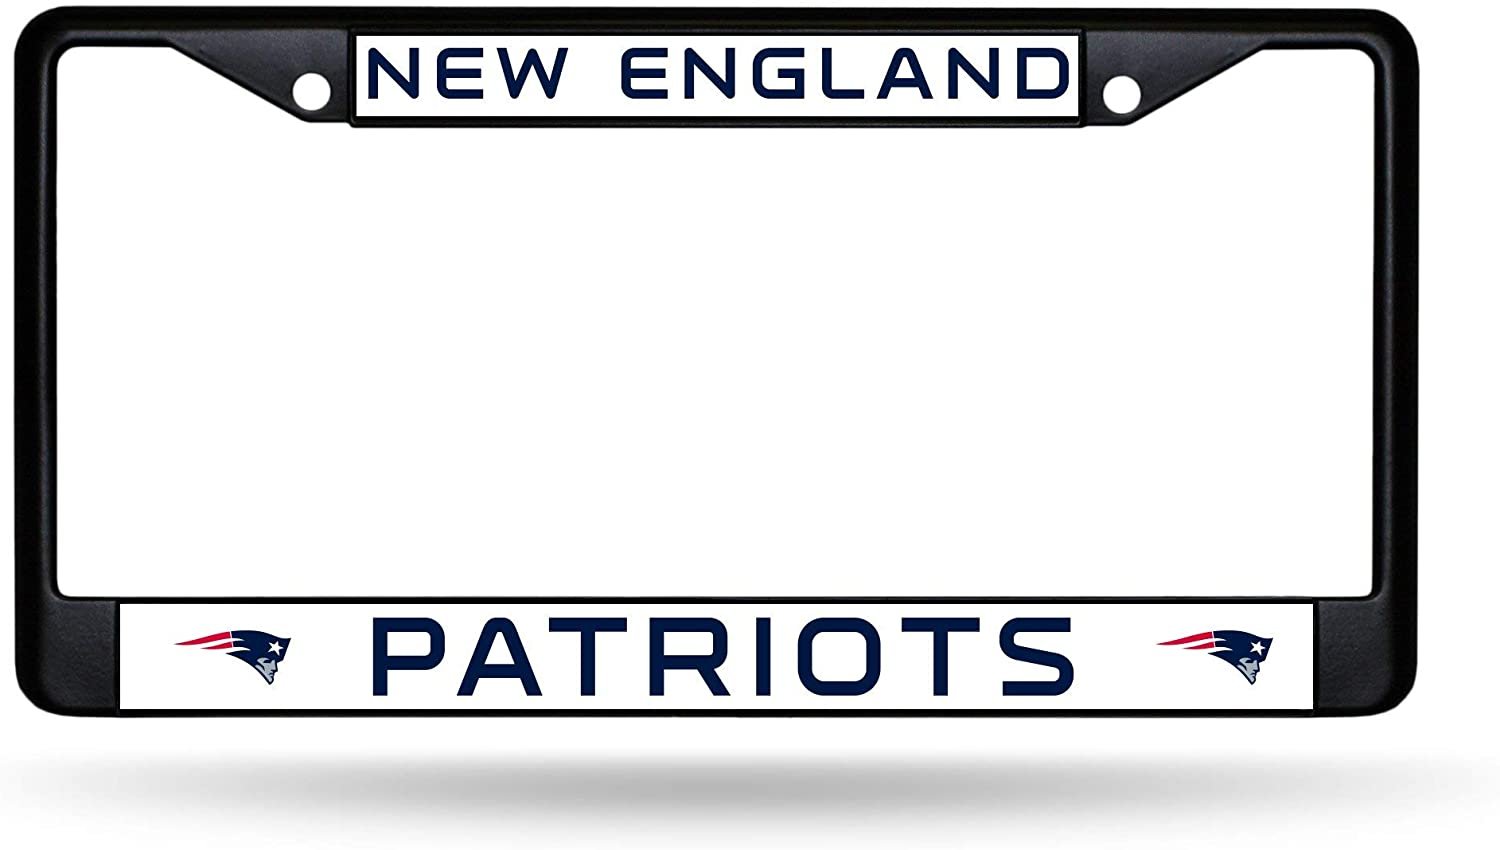 New England Patriots Black Metal License Plate Frame Chrome Tag Cover 6x12 Inch